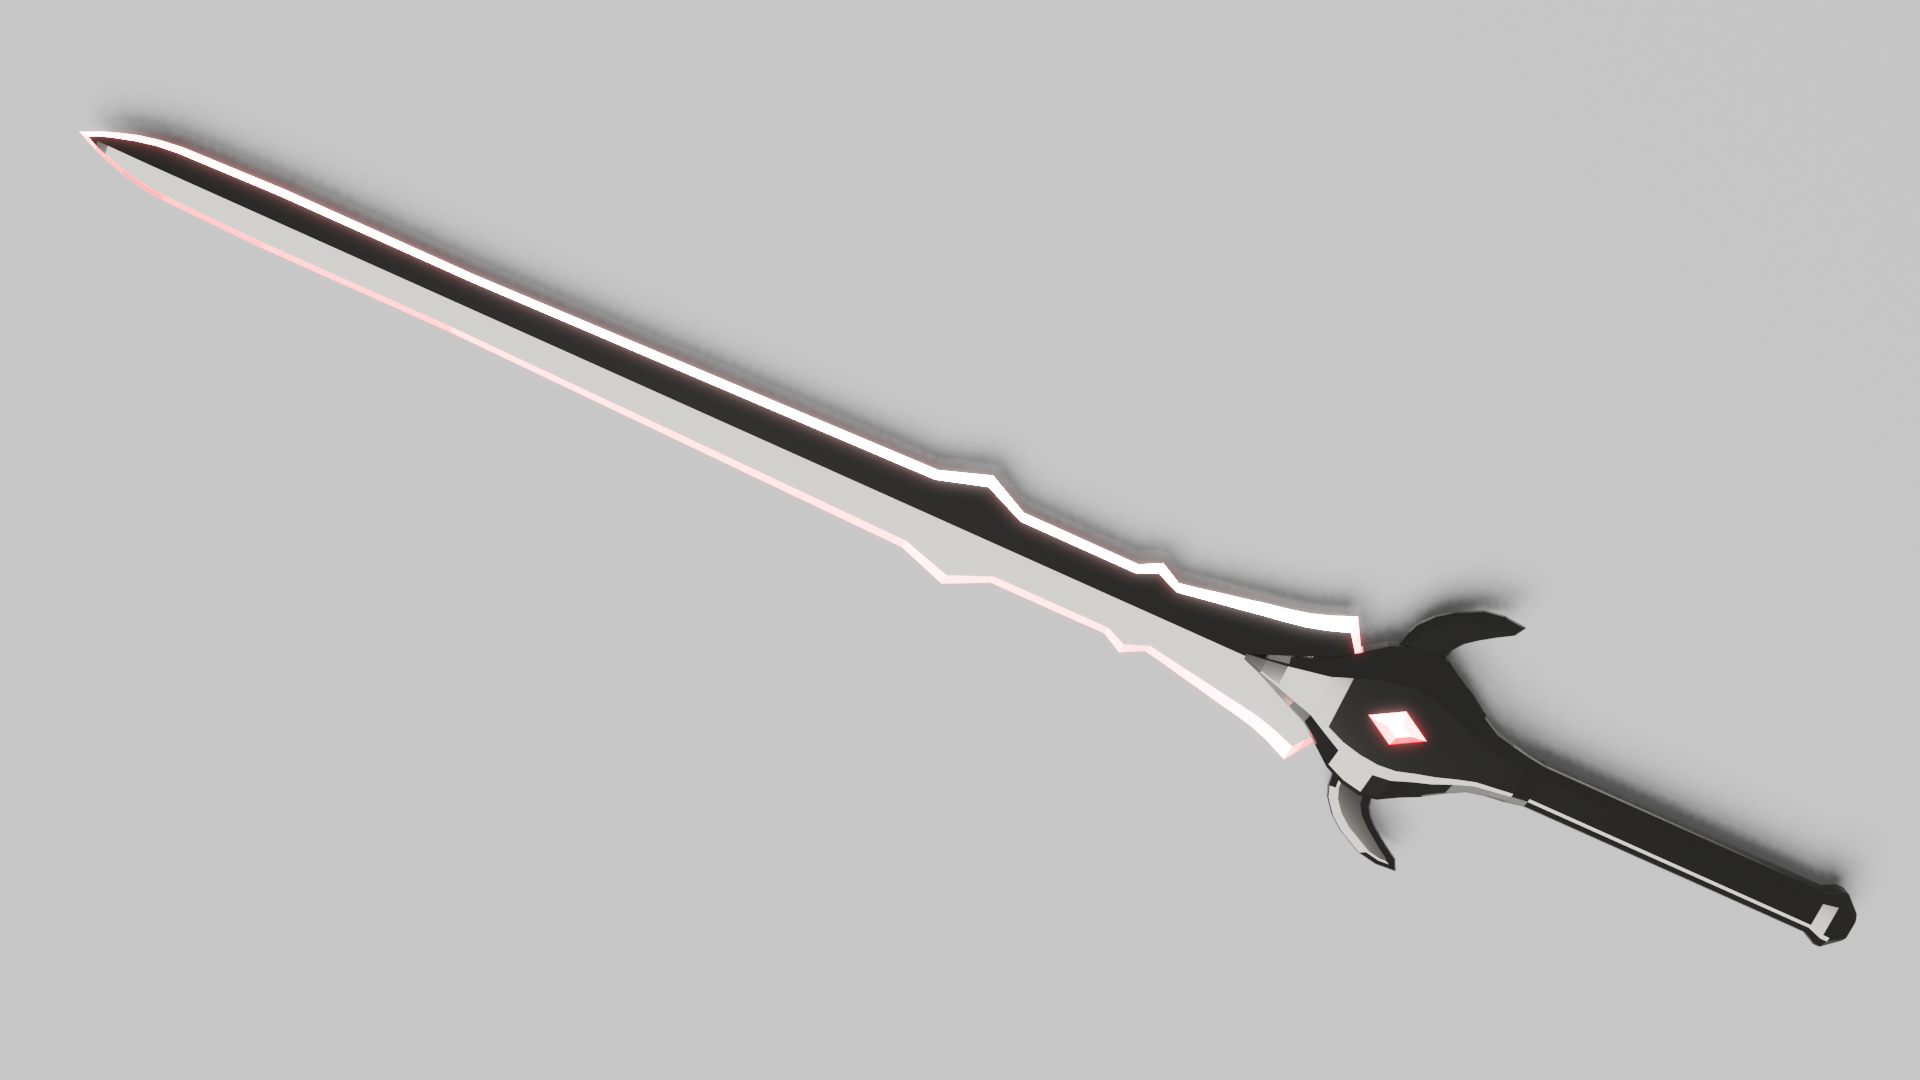 General 1920x1080 Blender sword weapon minimalism simple background CGI digital art